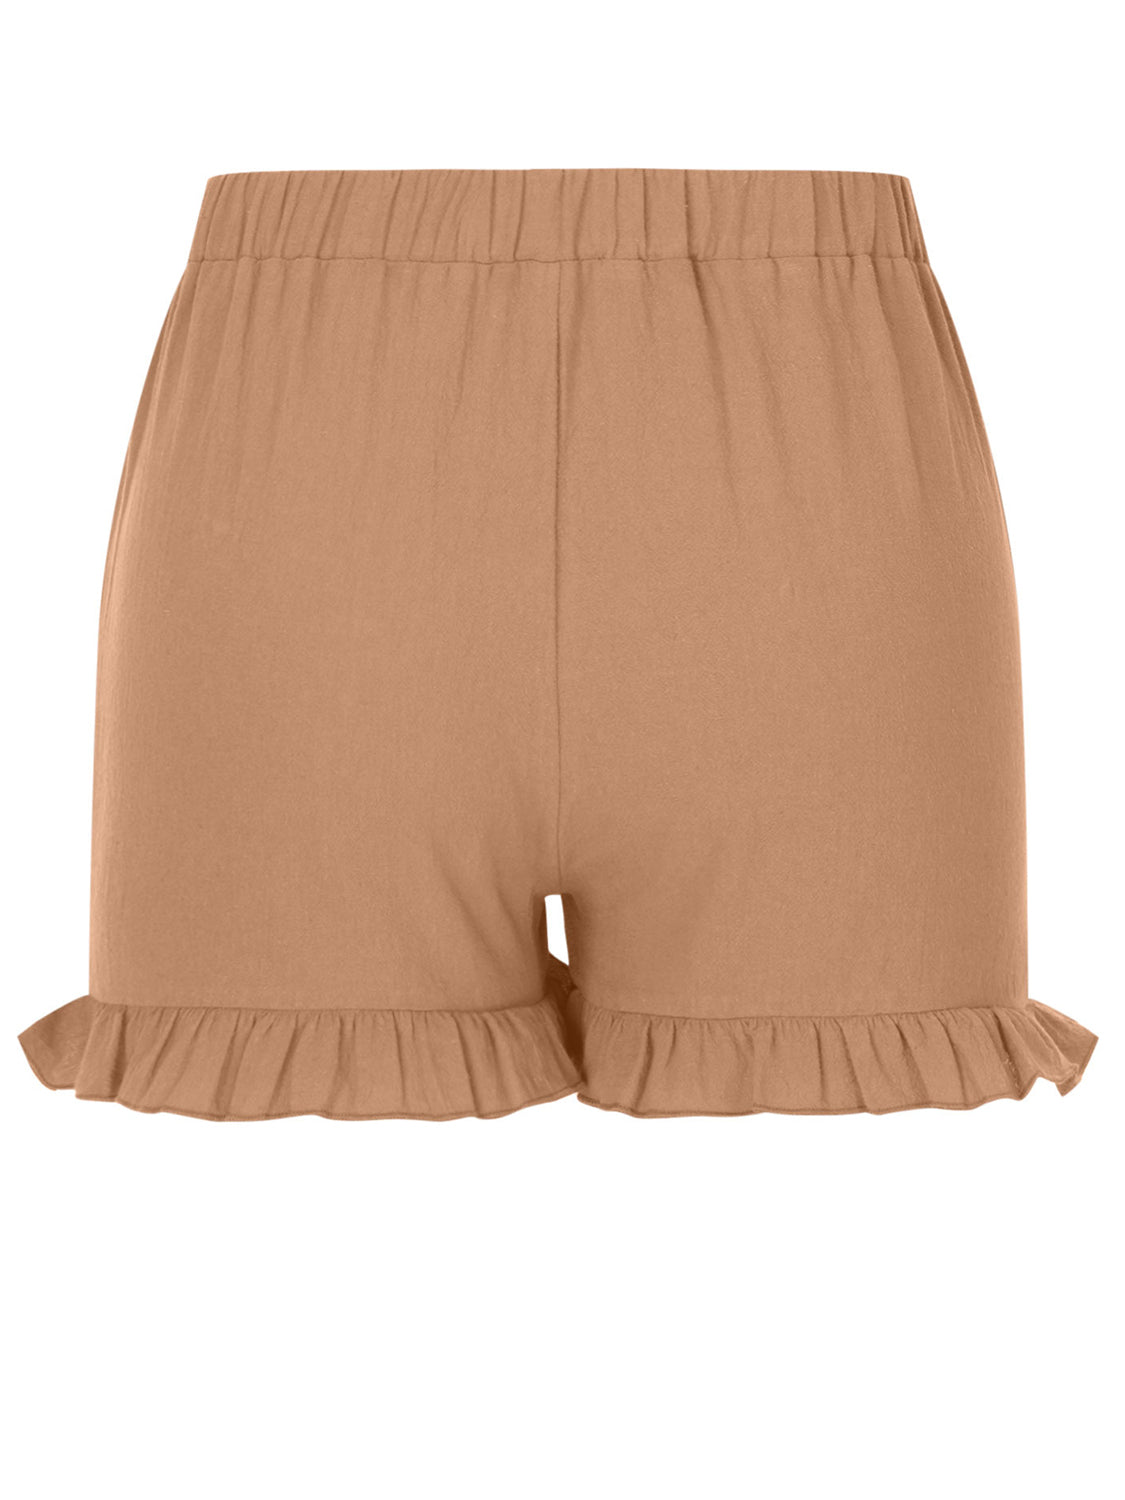 Frill Elastic Waist Shorts